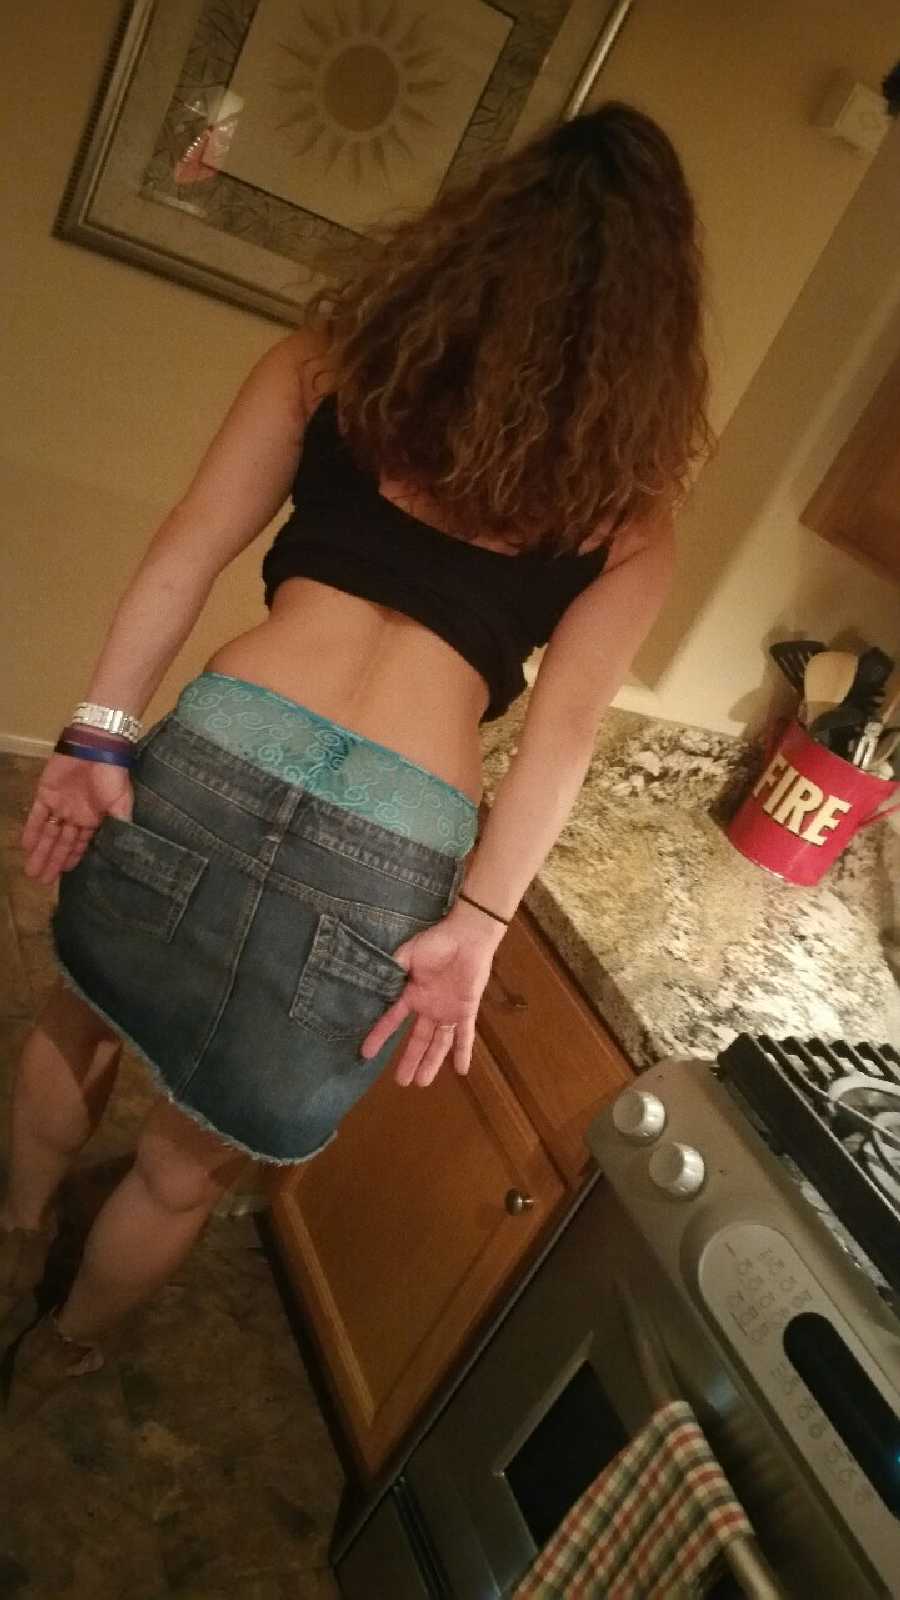 Stripping Down in the Kitchen